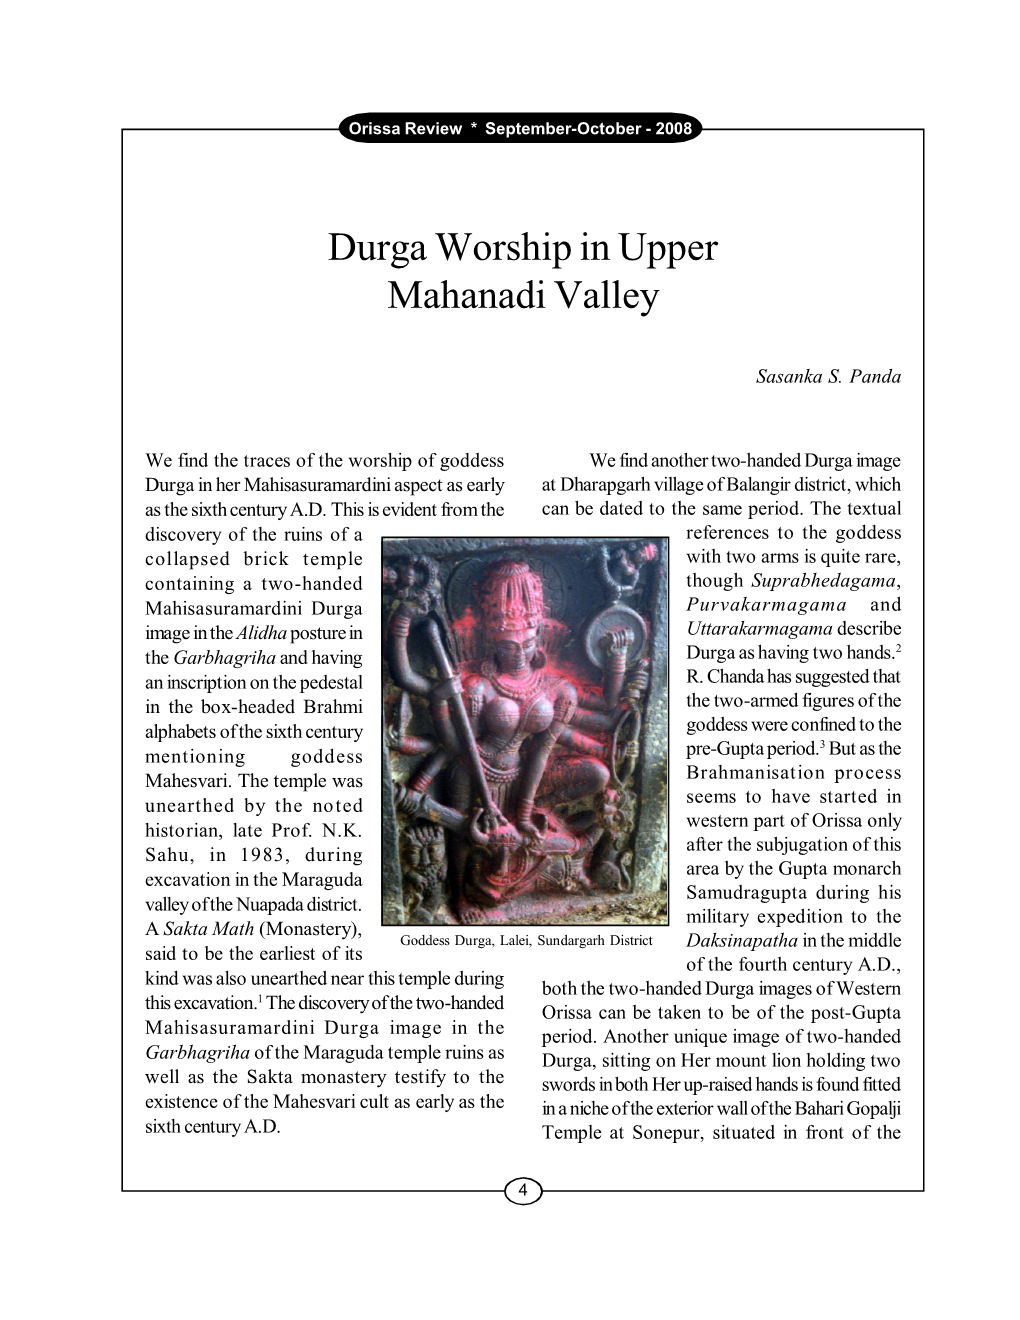 Durga Worship in Upper Mahanadi Valley